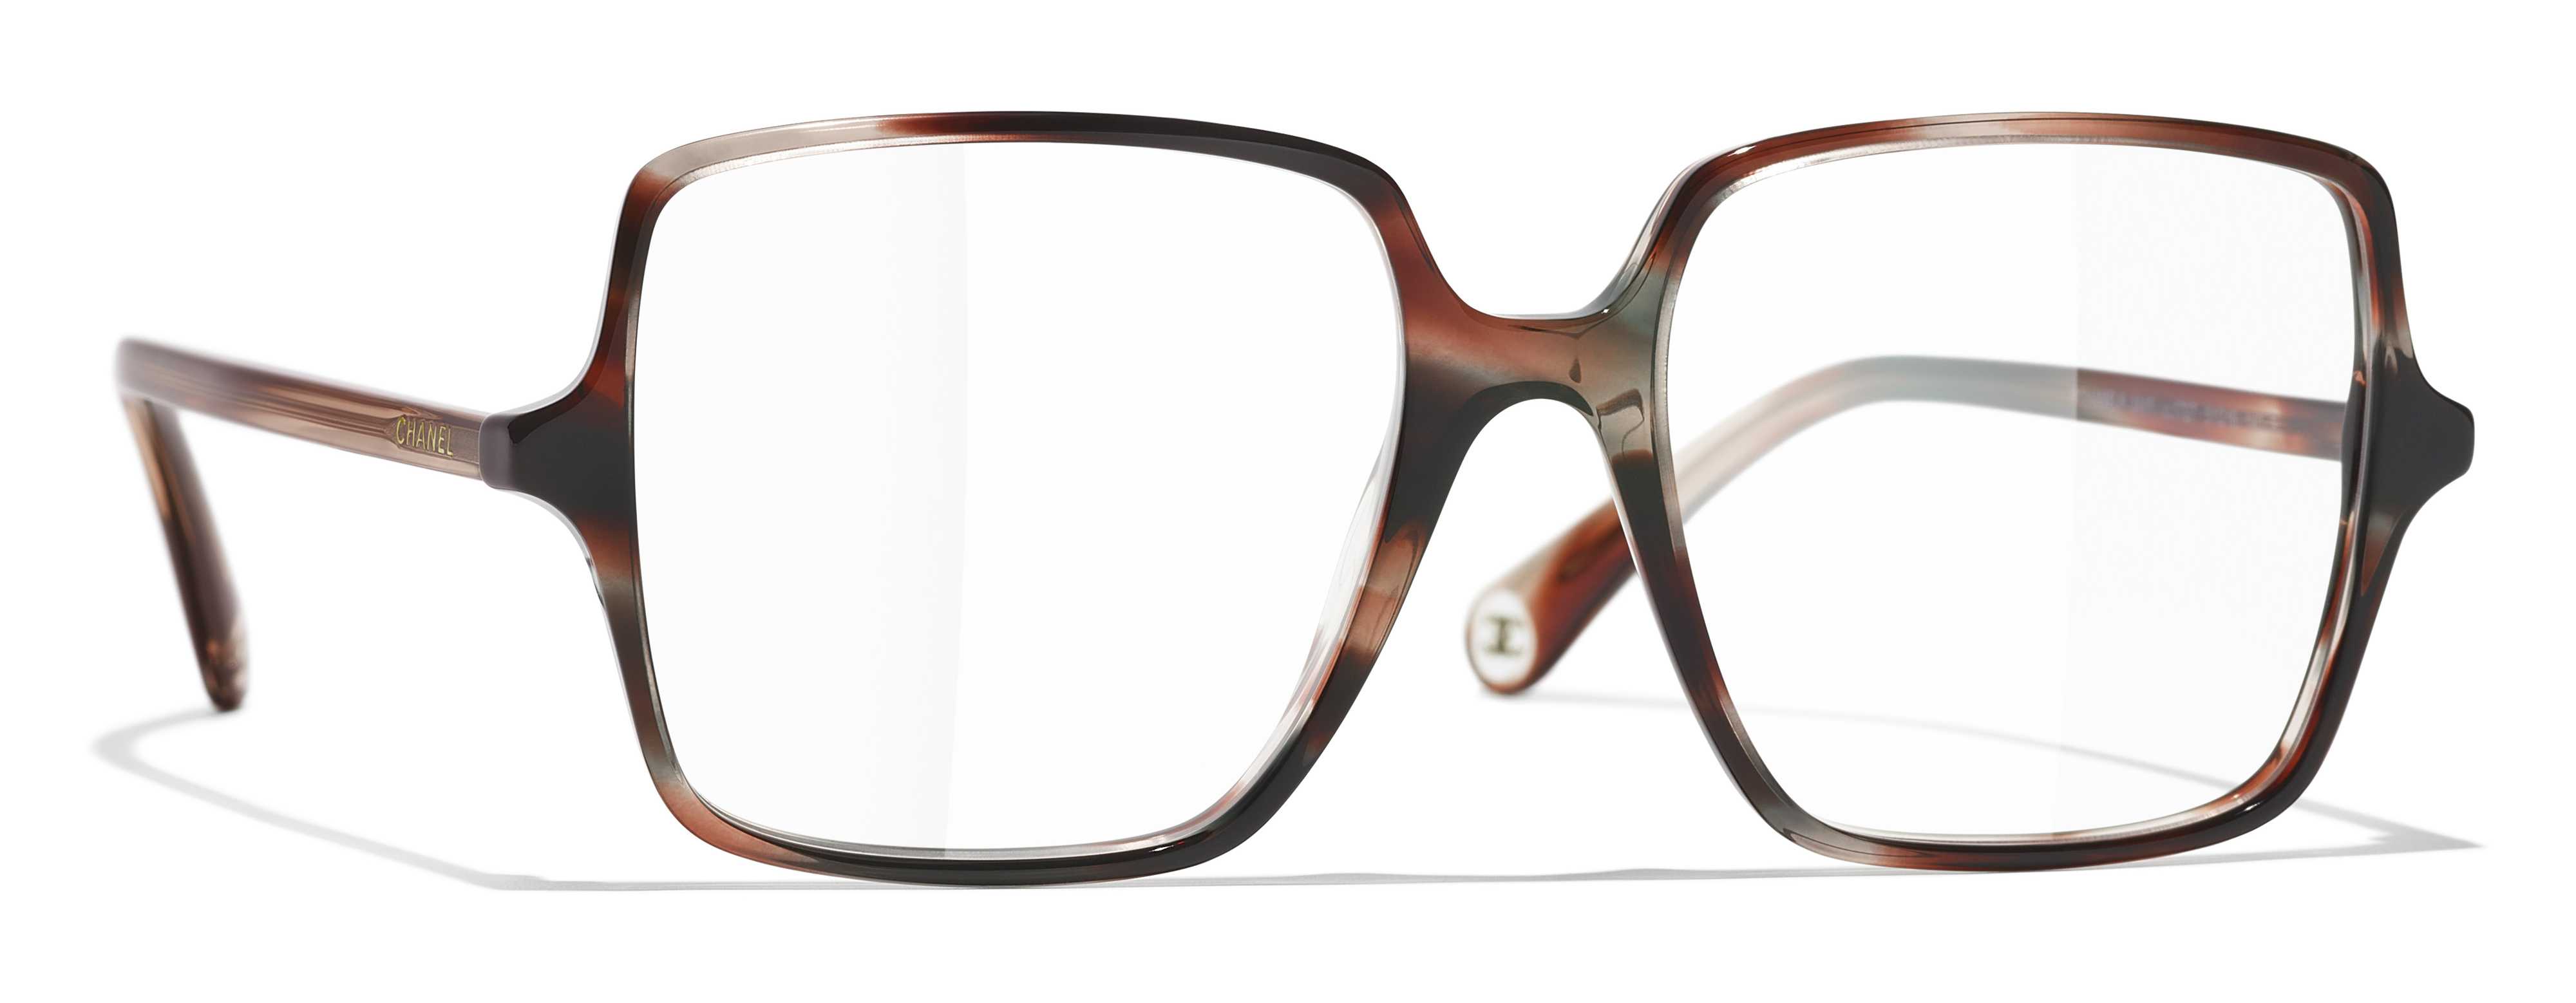 Eyeglasses CHANEL CH 3448 1727 51/16 Woman Ecaille marron / Gris square  frames Full Frame Glasses trendy 51mmx16mm 238$CA